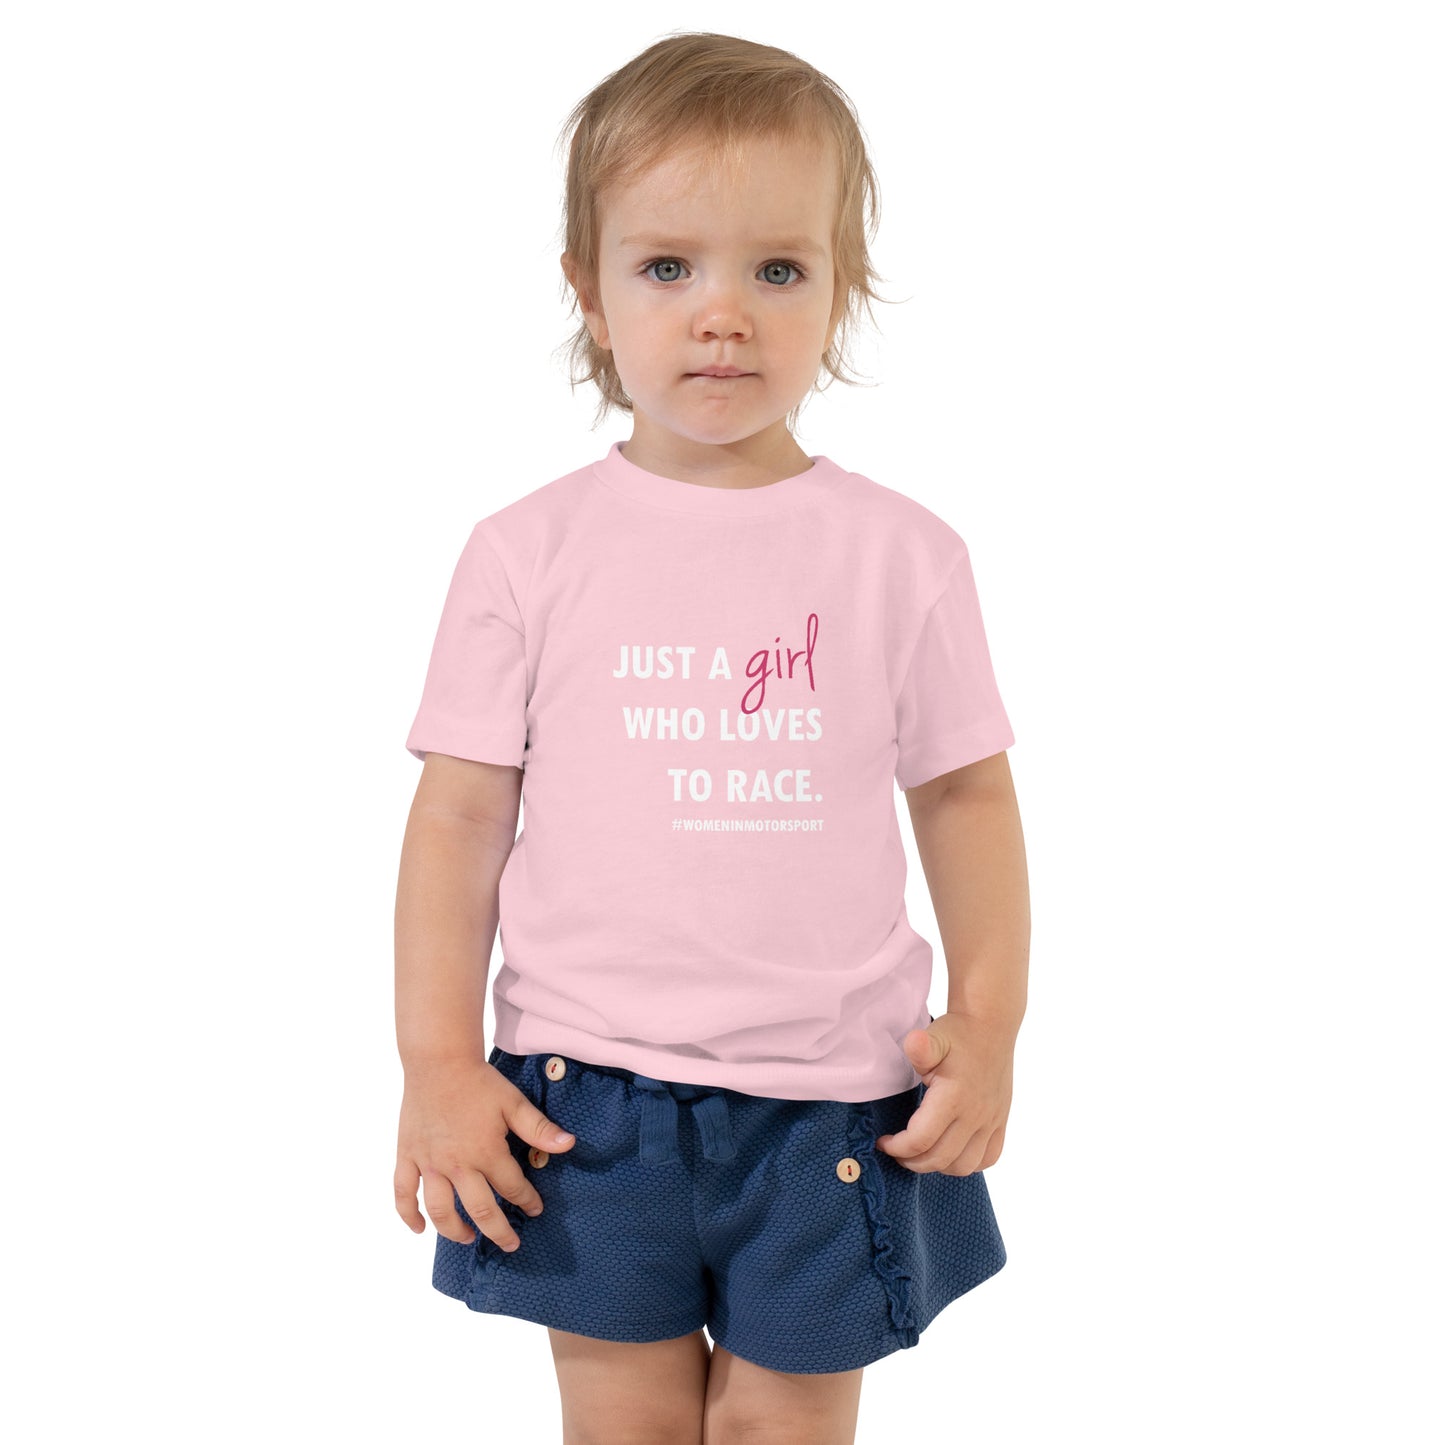 WHEEL SISTERS Toddler Shirt Just a girl